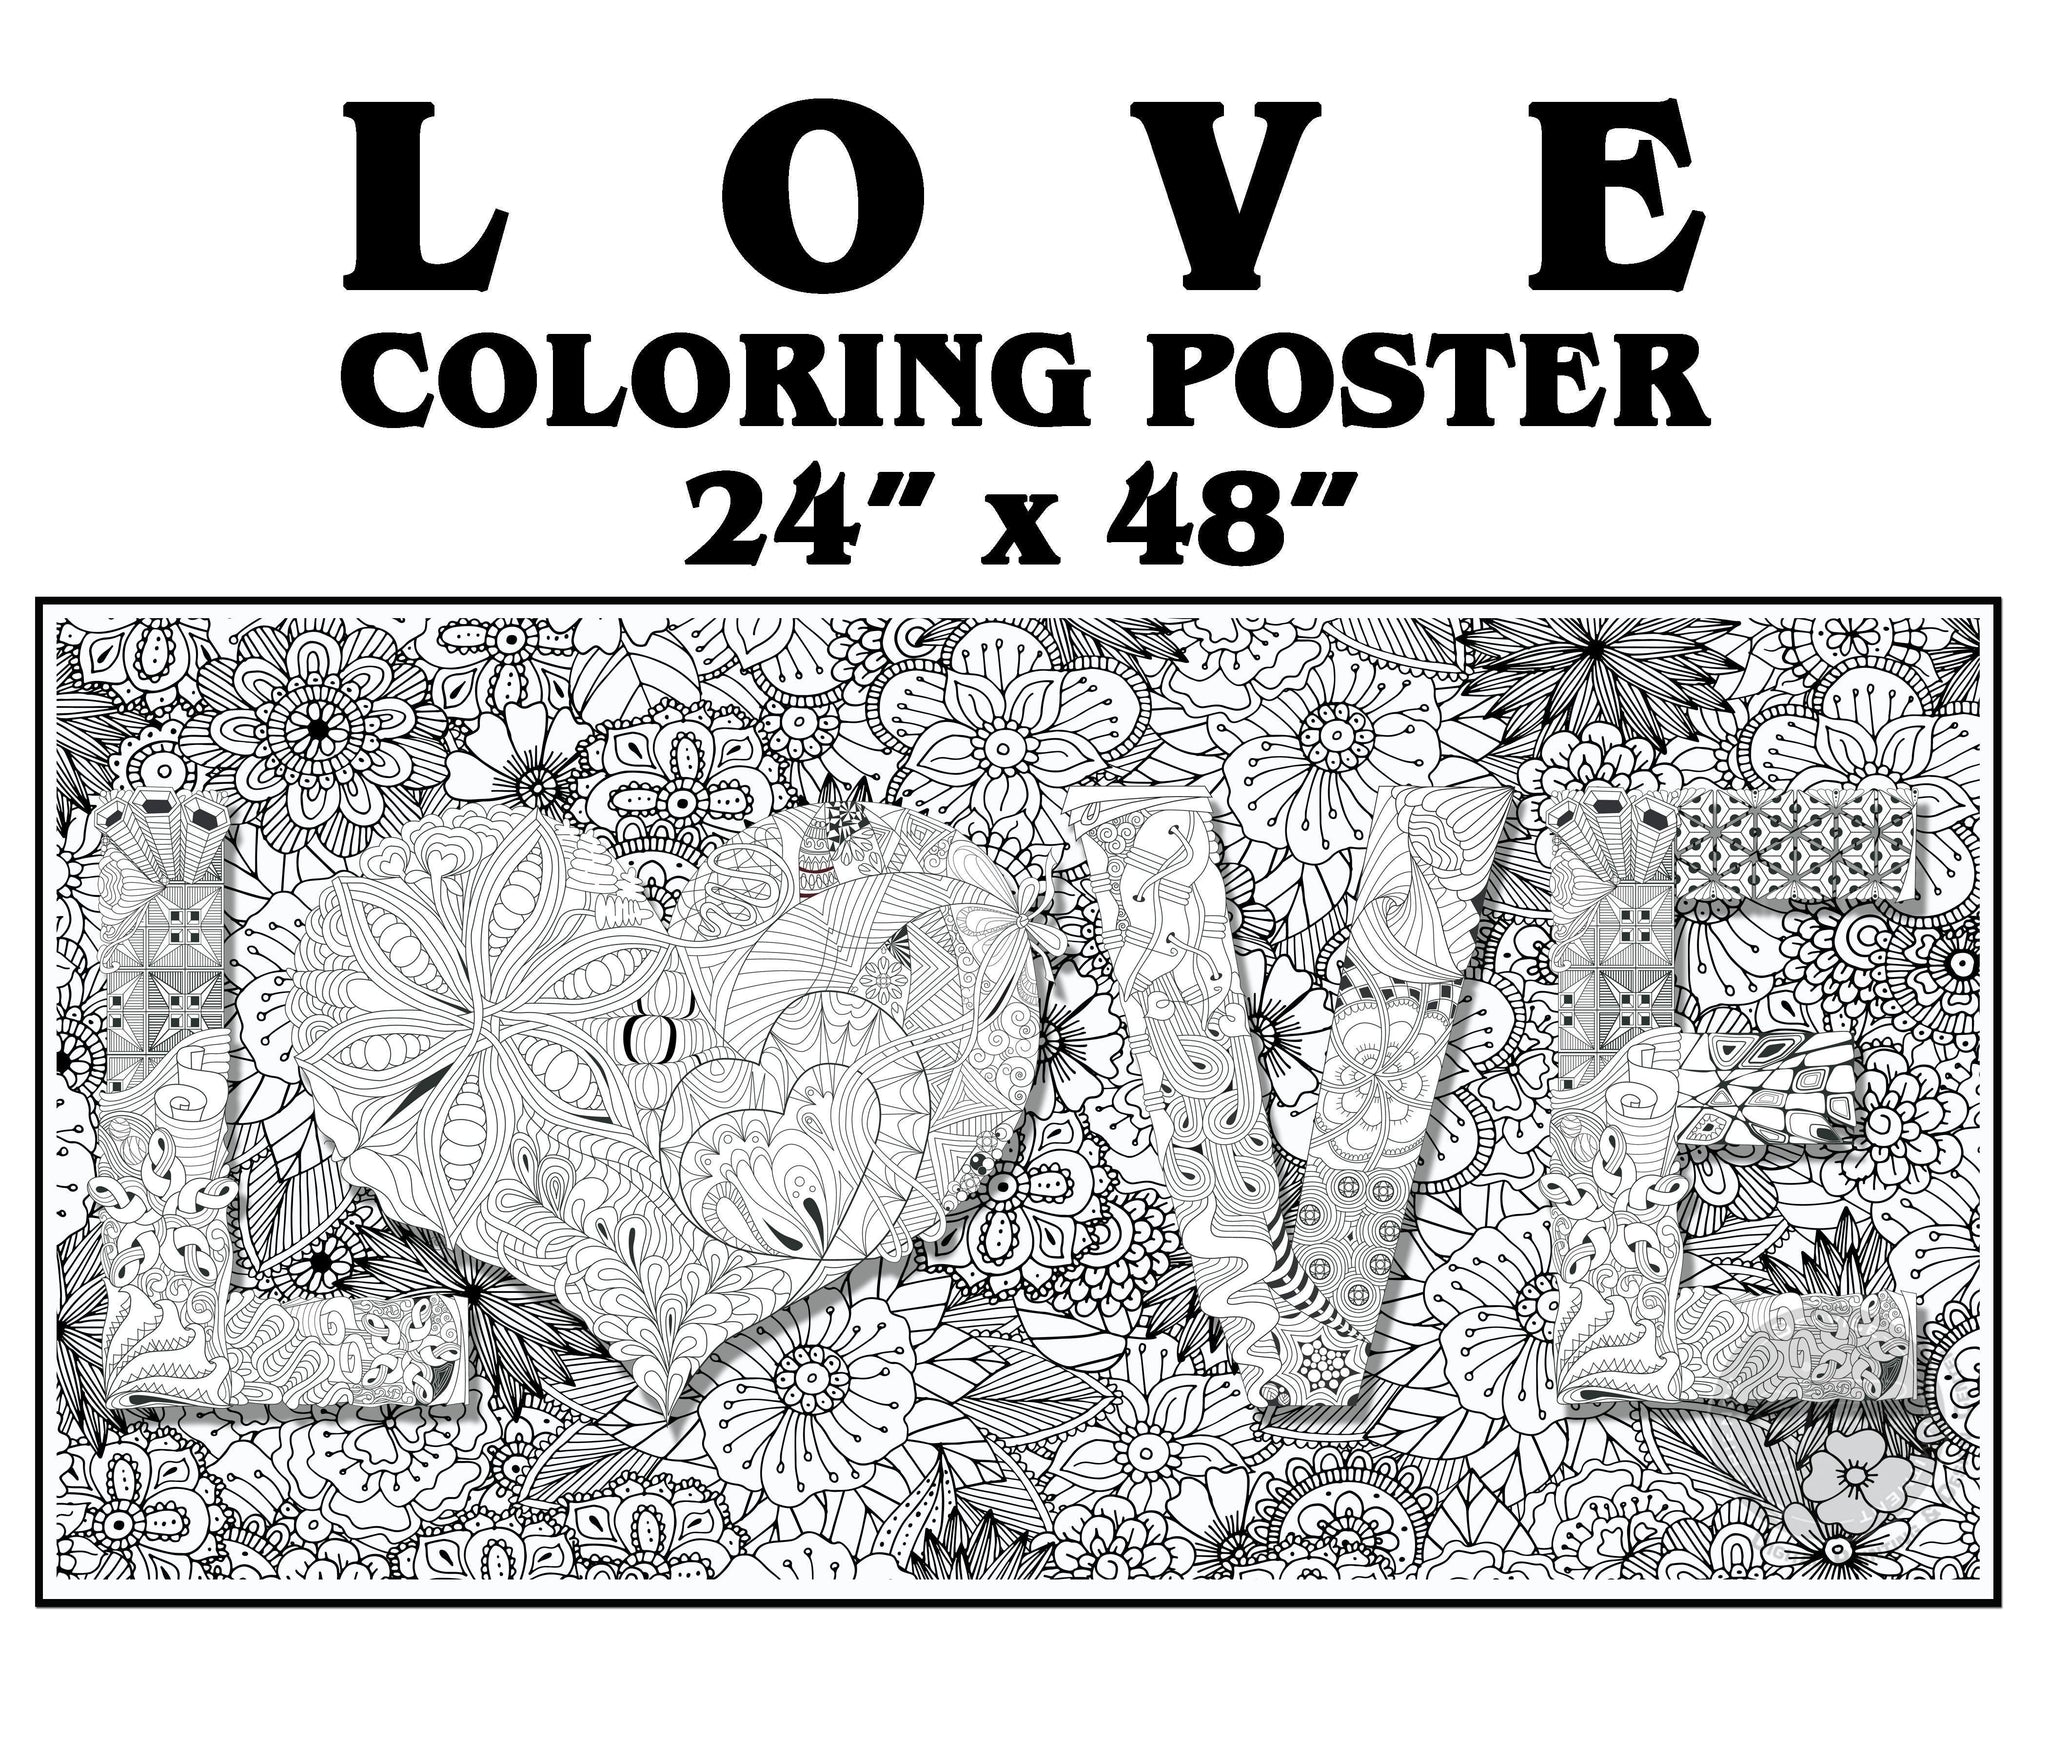 Shop flower garden coloring posters from SJPrinter Store